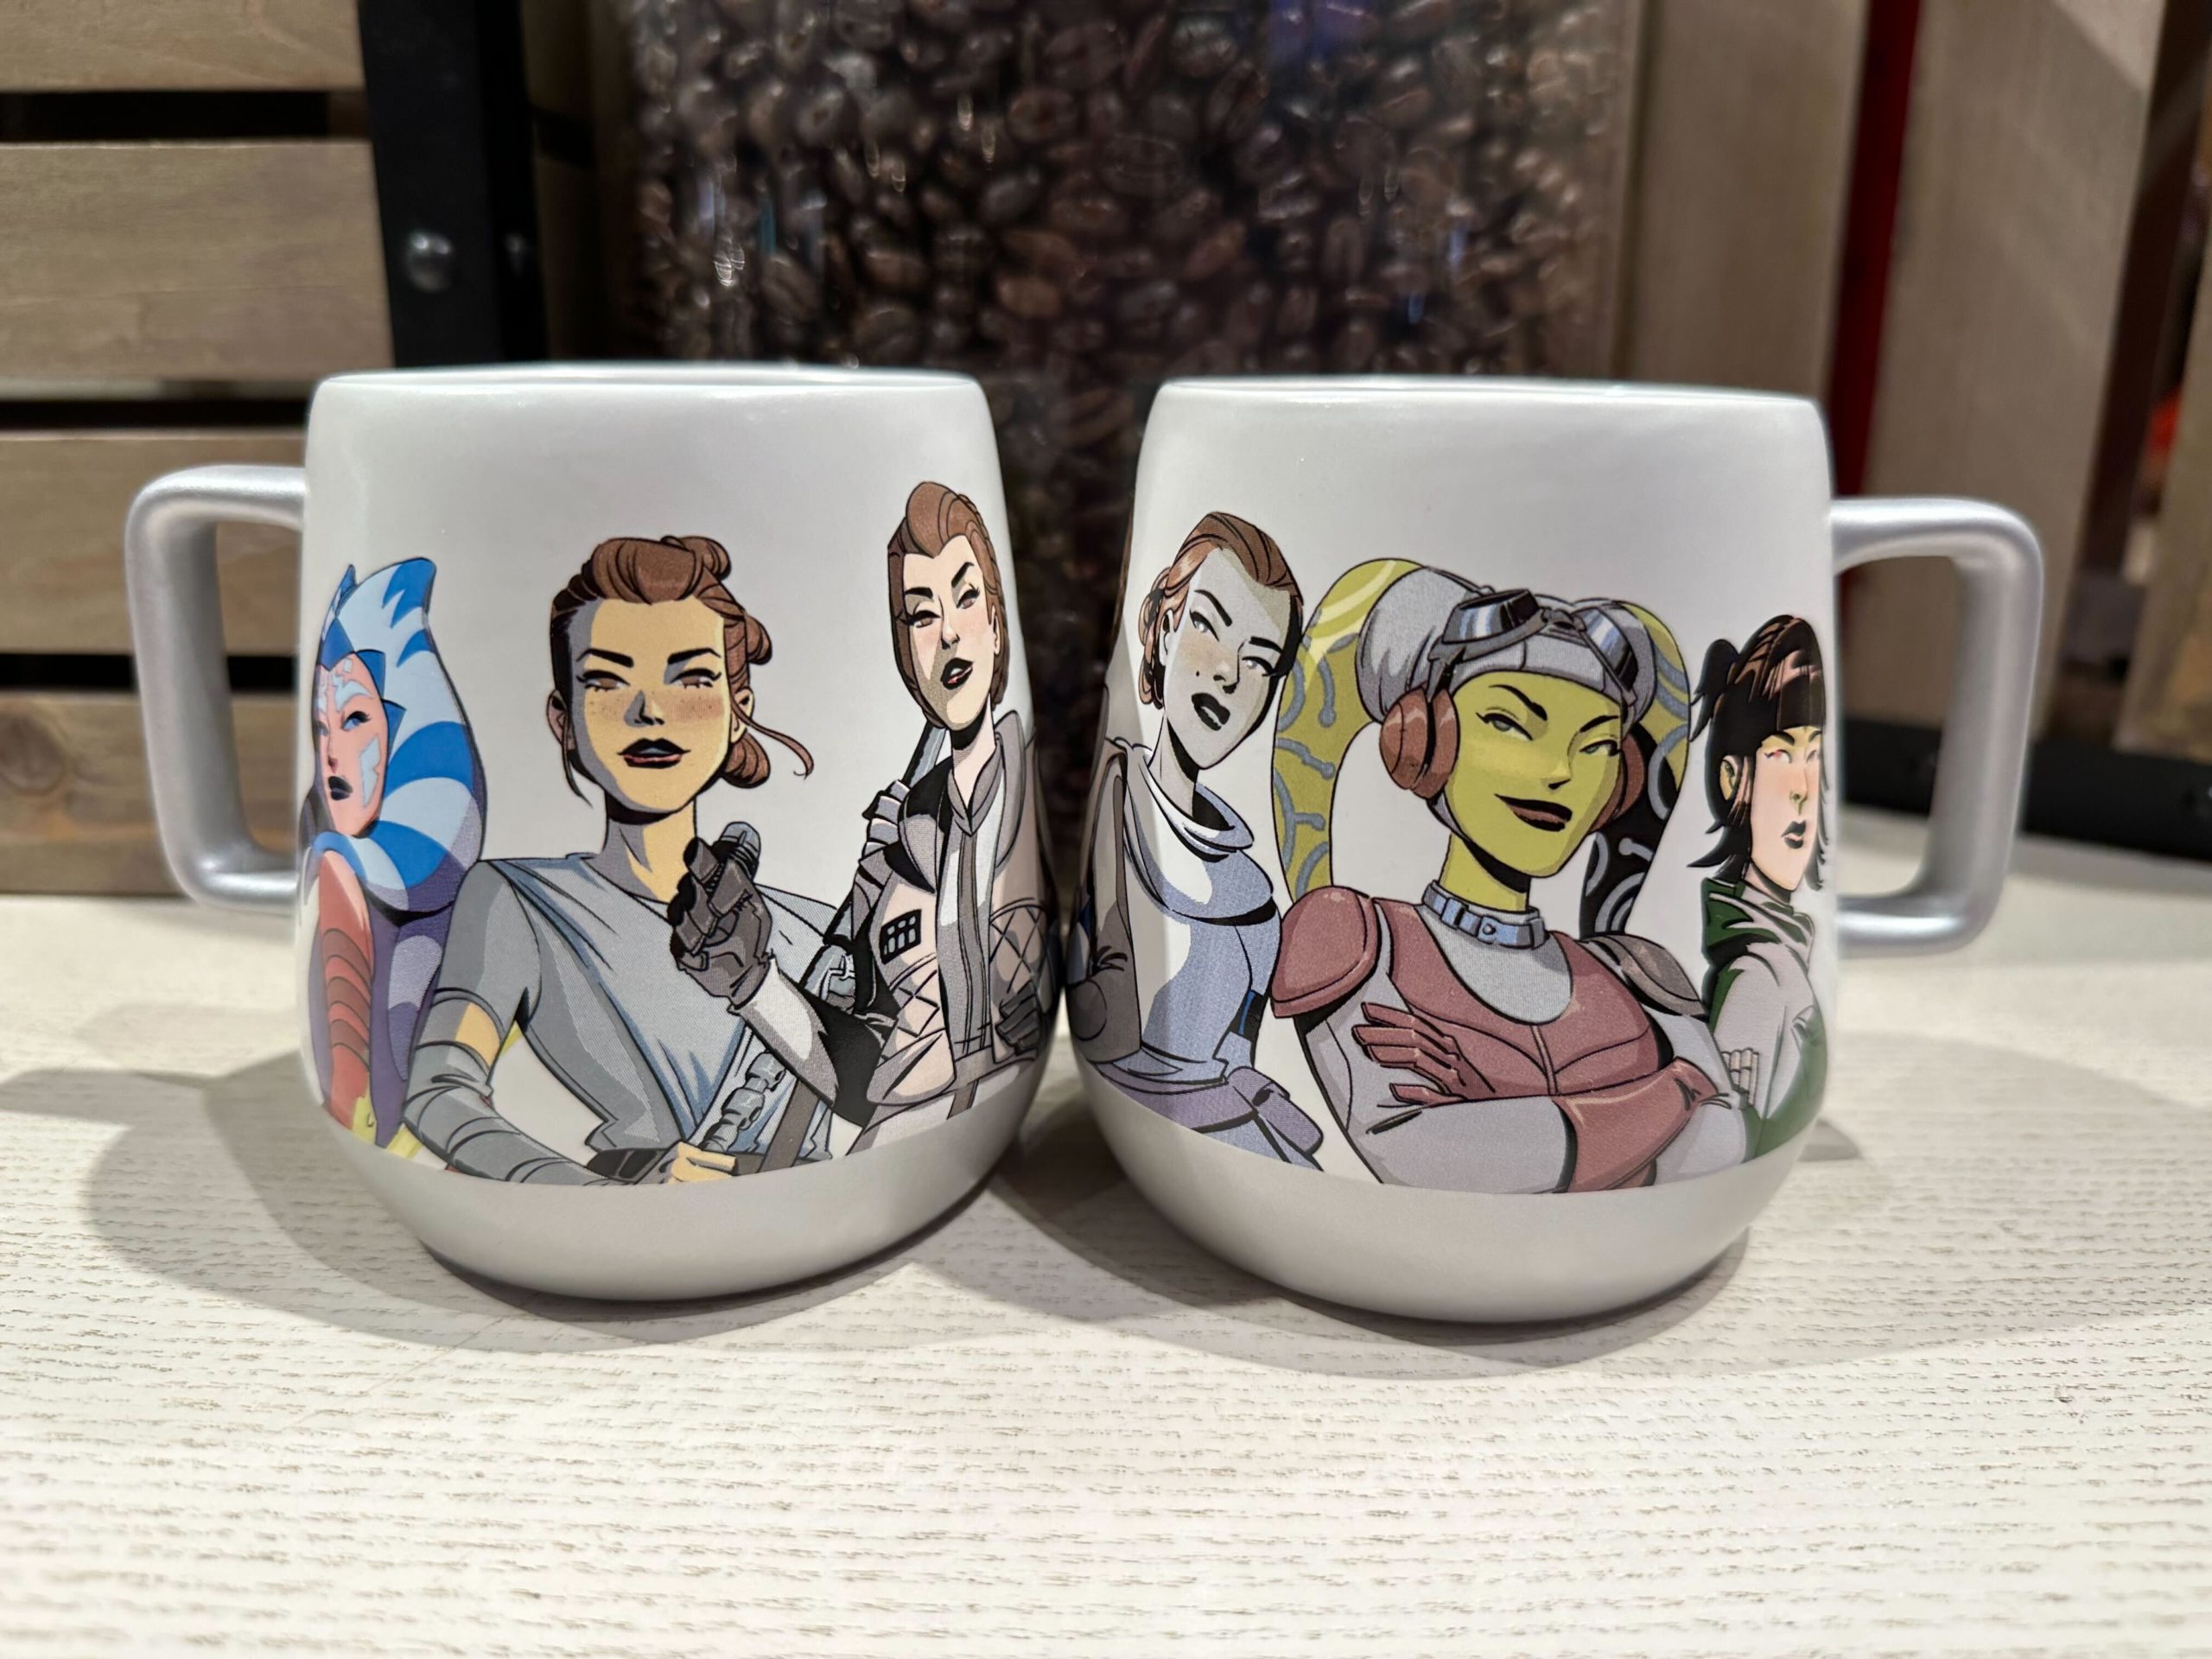 The Women of Star Wars Mug – Citizen Ruth